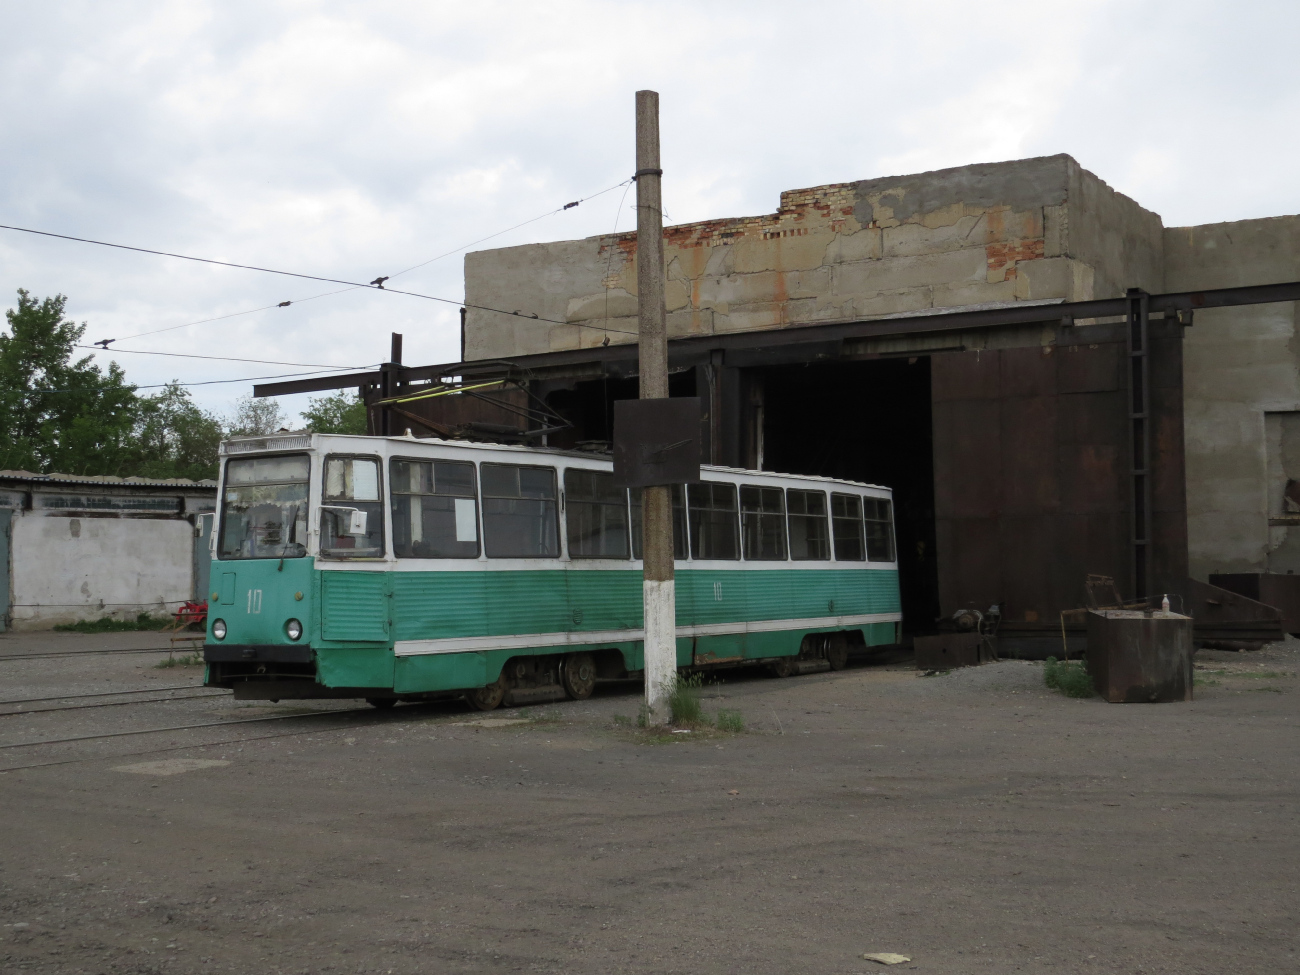 Темиртау, 71-605 (КТМ-5М3) № 10; Темиртау — Трамвайный парк